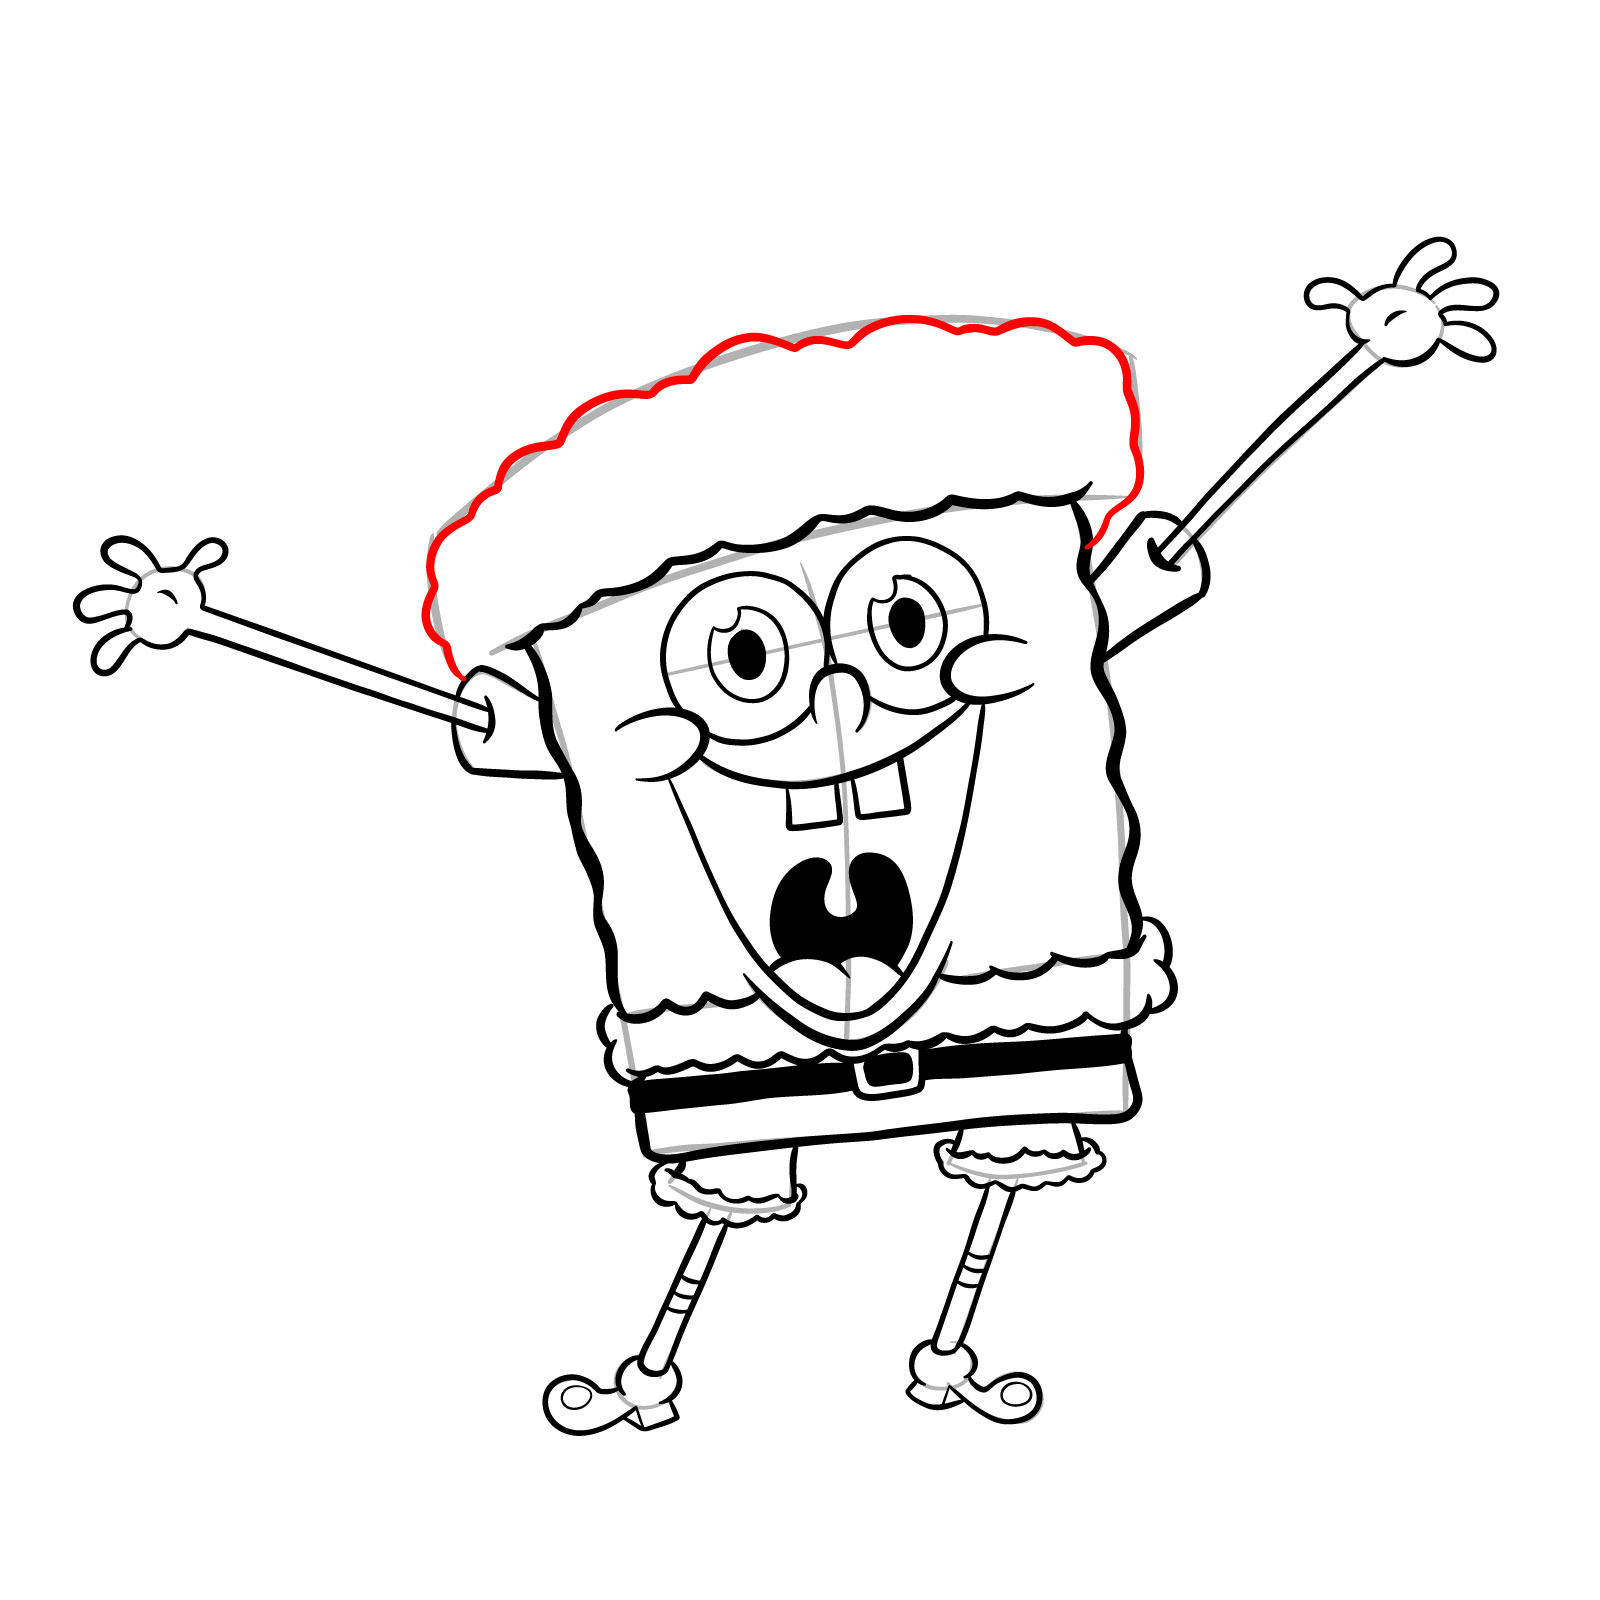 How to draw Santa SpongeBob SquarePants - step 23